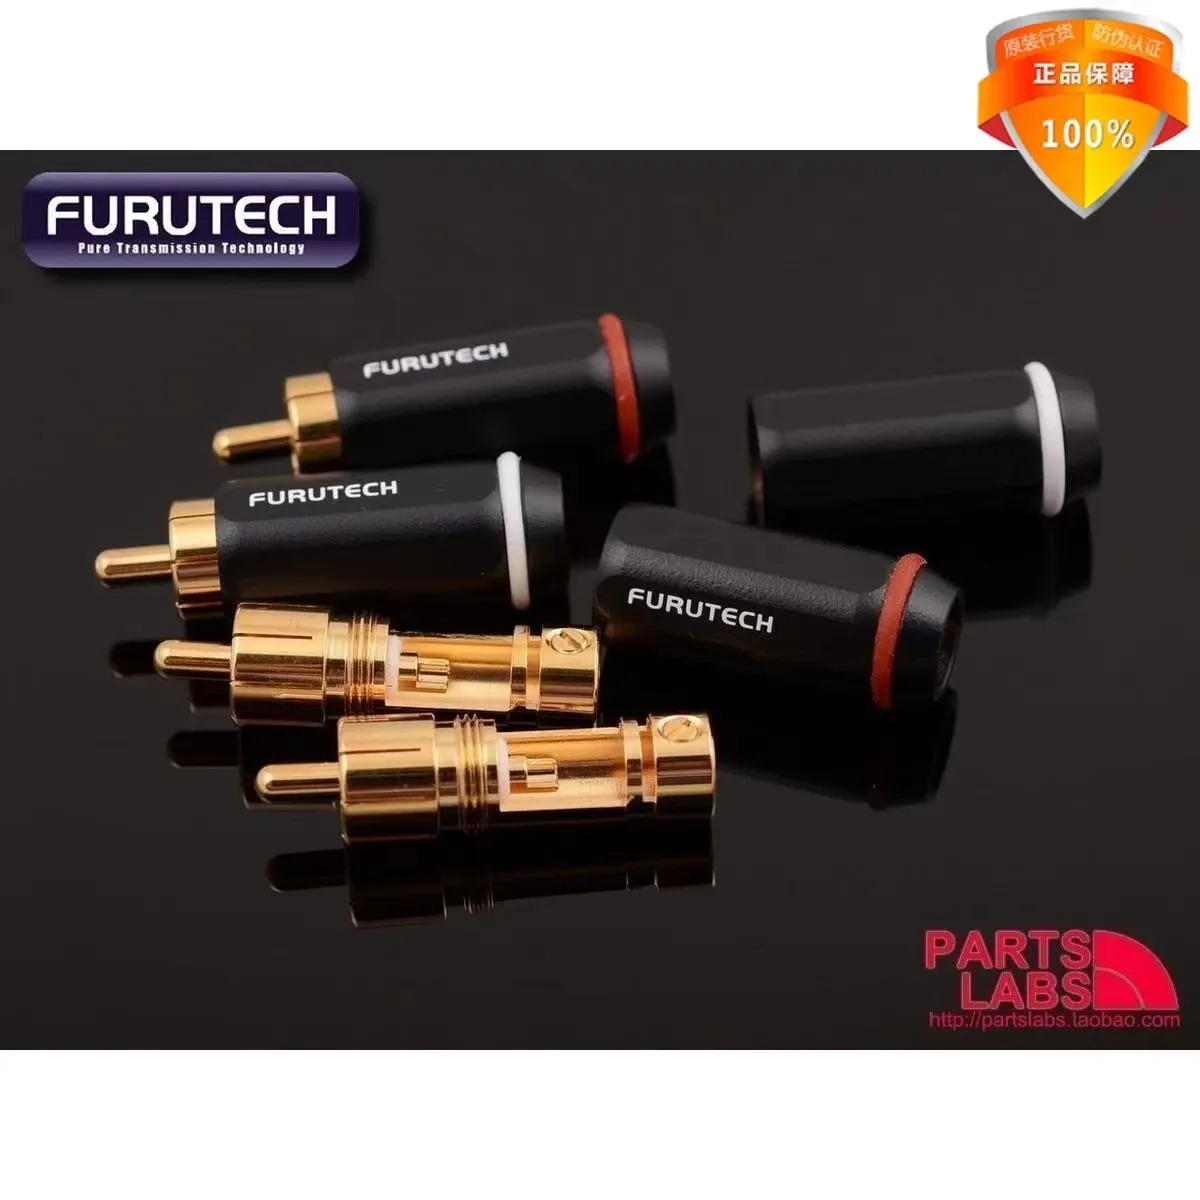 Accessories Furukawa original furutech alpha process FP126 goldplated audiophile RCA Connector Plug HiFi audio cable plug wire OD ≤7mm